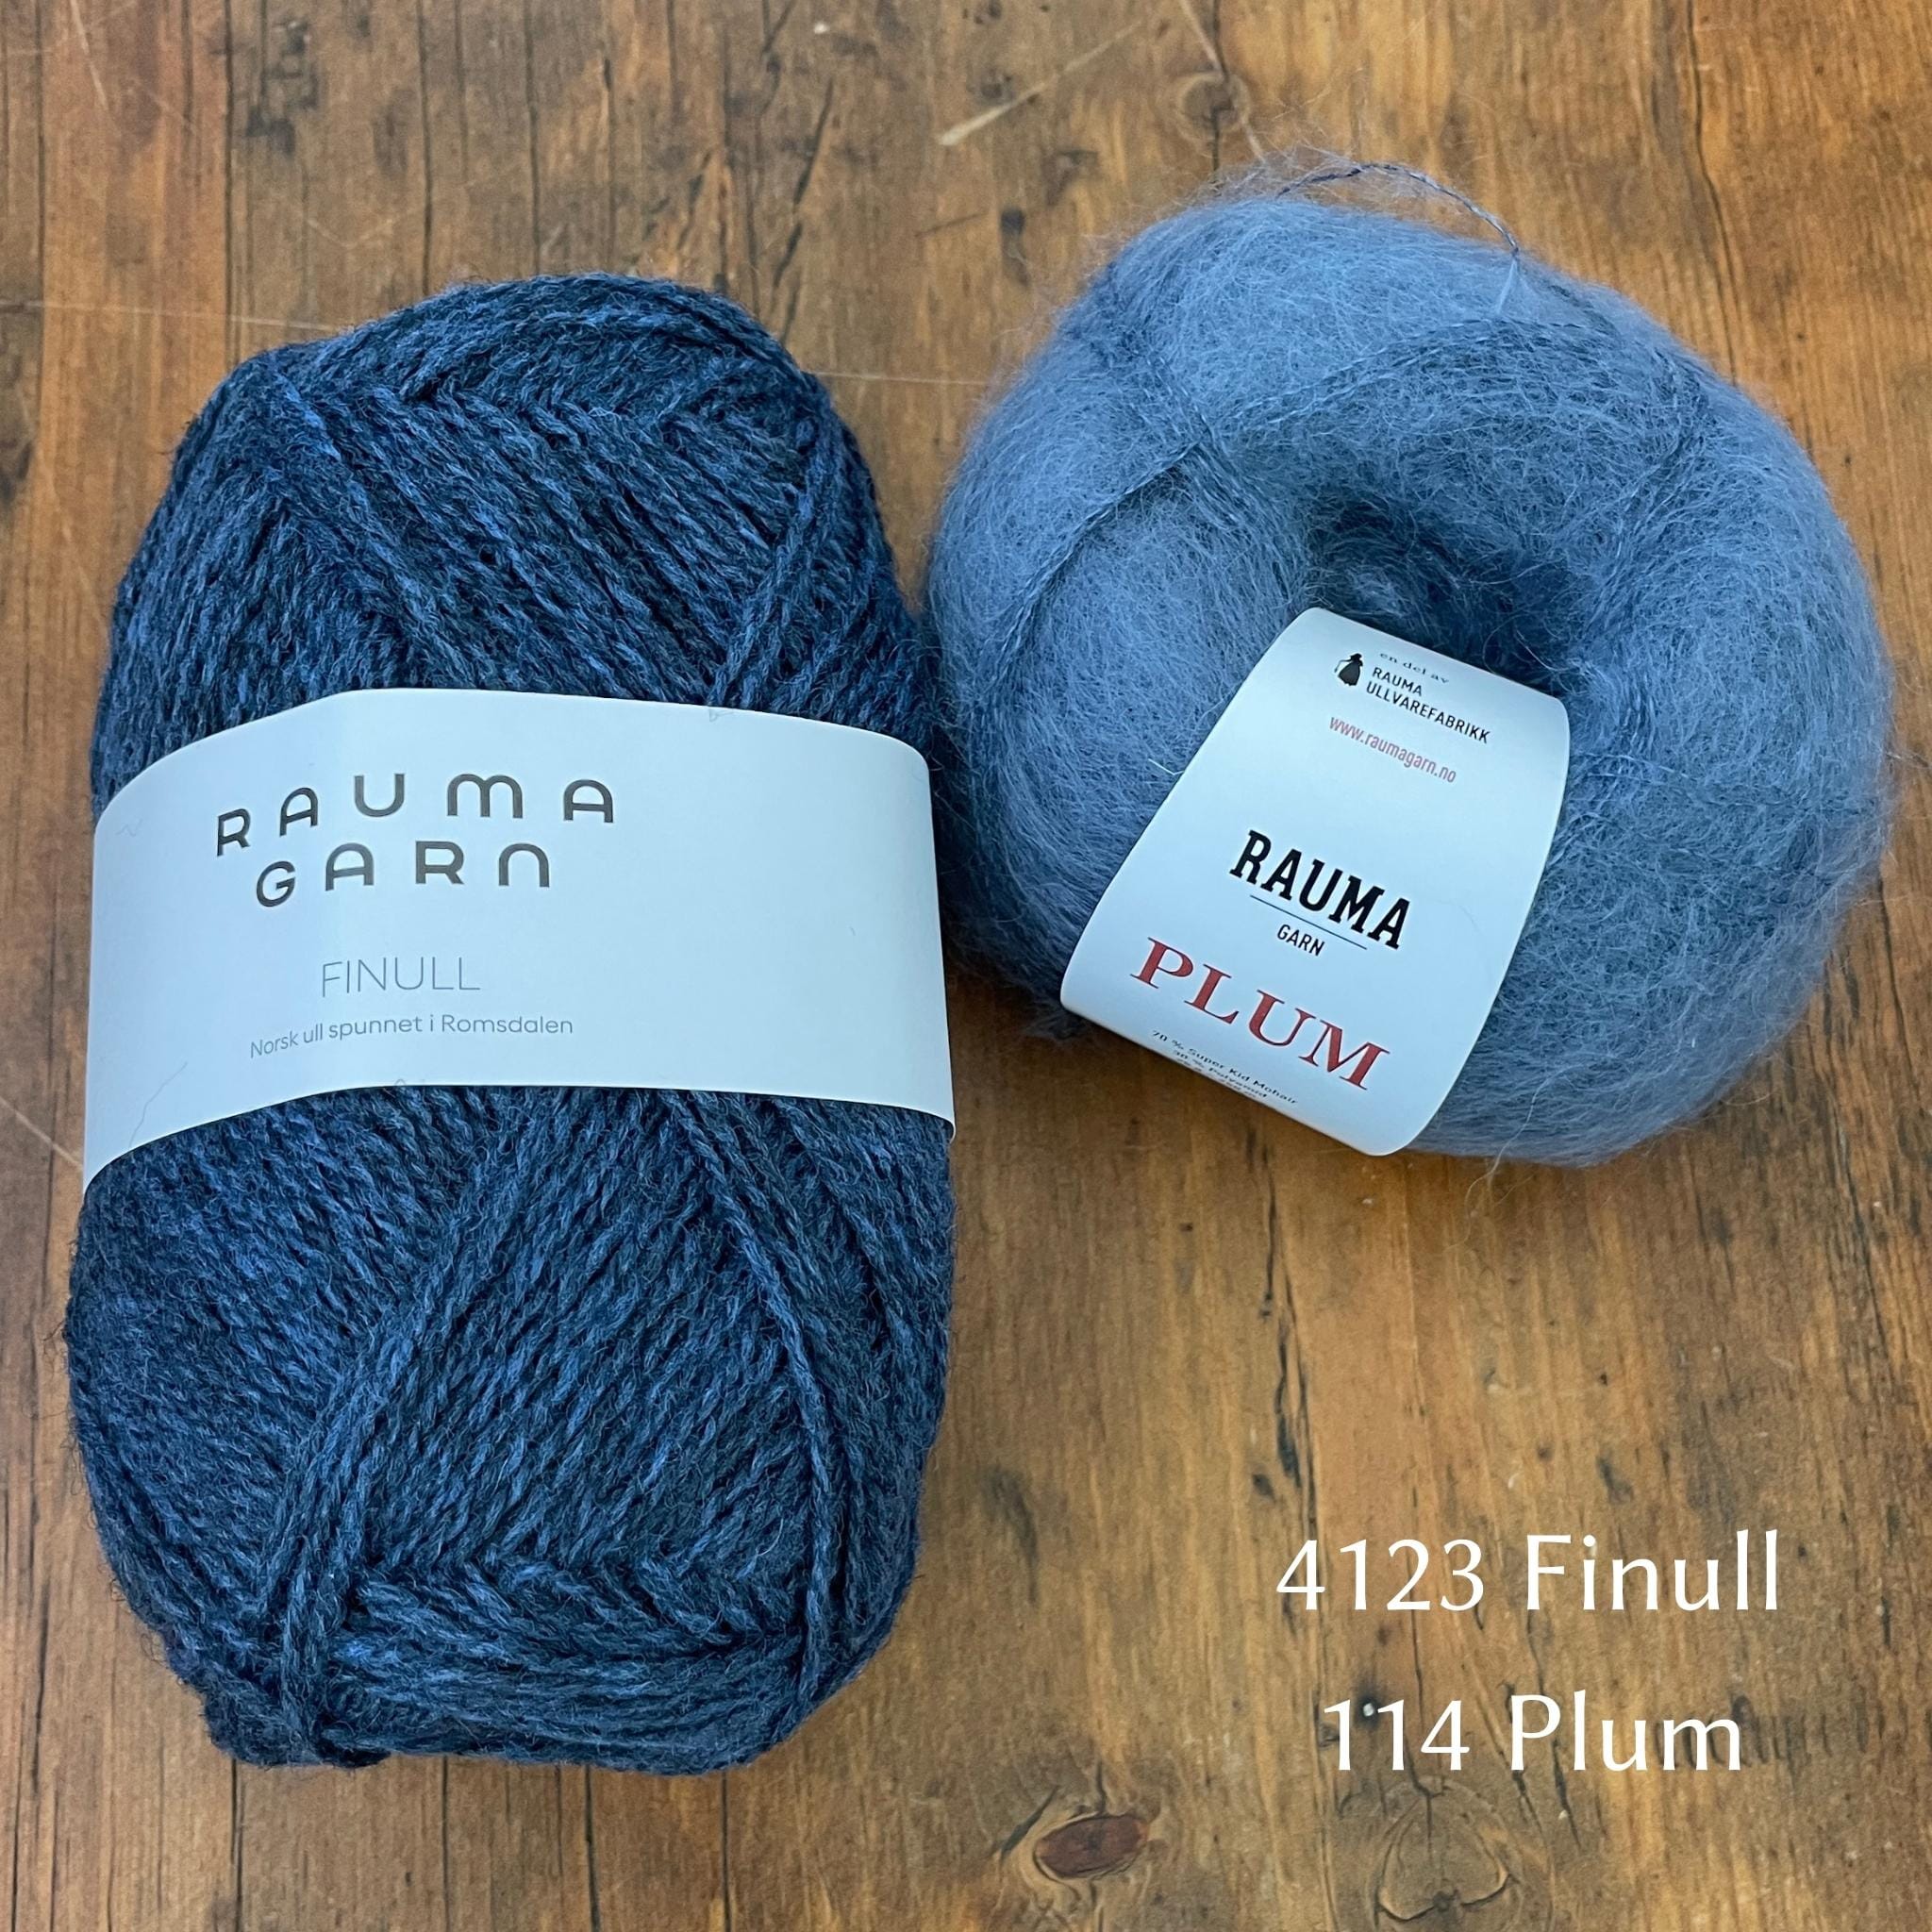 Ball of Rauma Finullgarn yarn in heathered blue with coordinating Plum yarn 